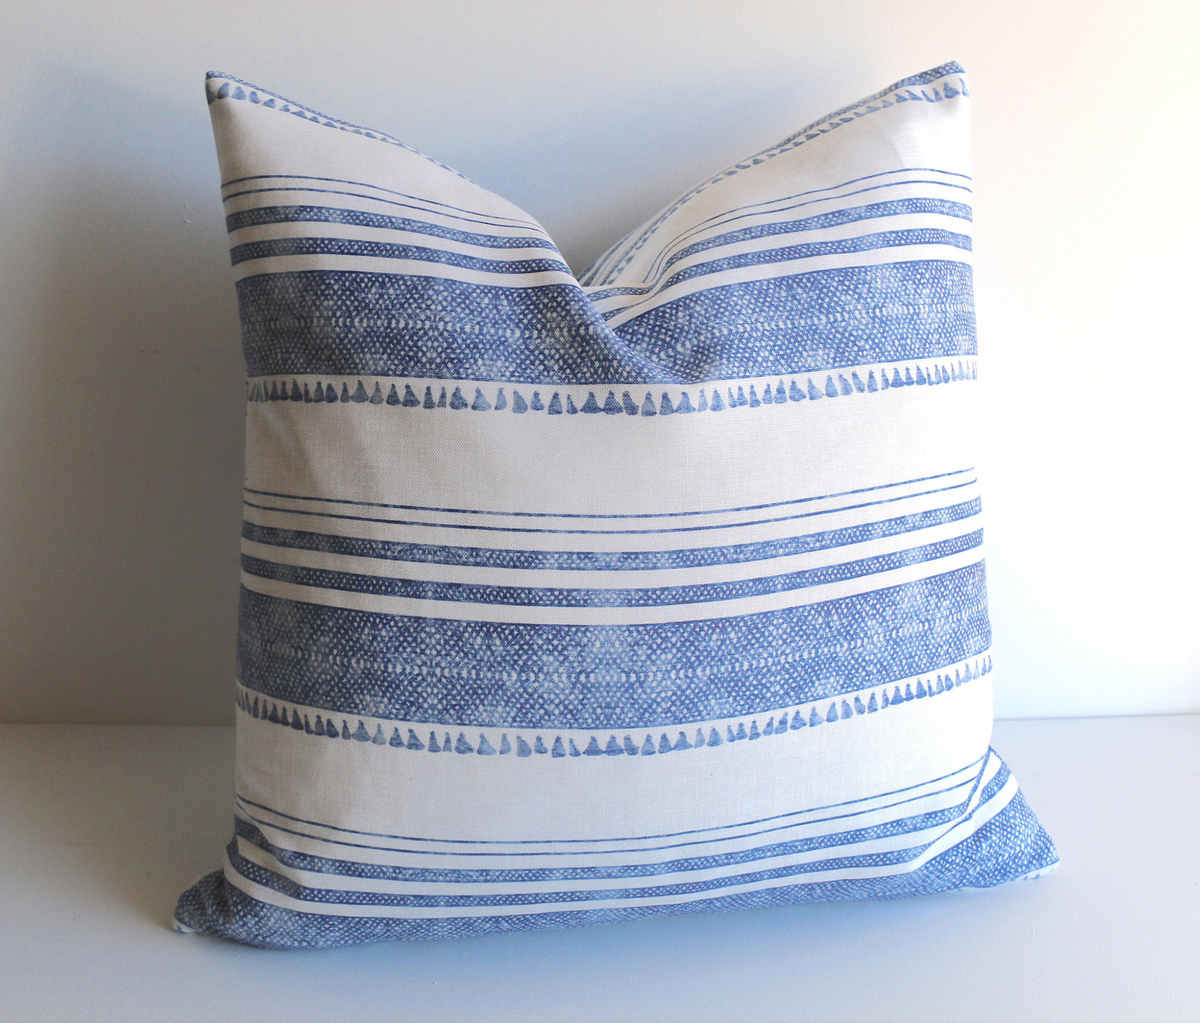 Chambray Blue So Soft Linen Pillows – Anaya